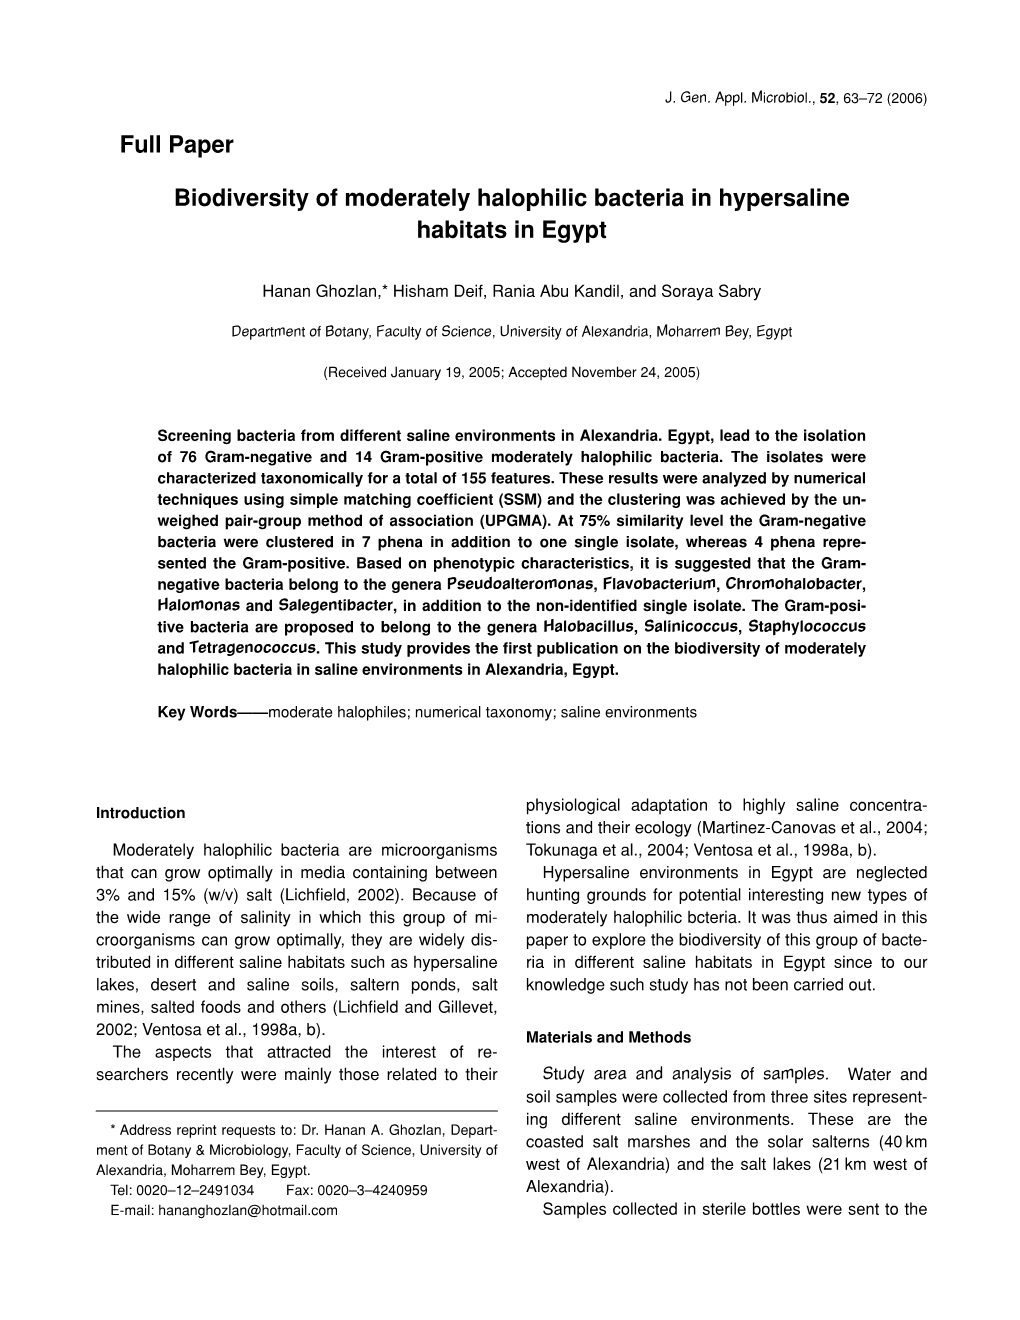 Biodiversity of Moderately Halophilic Bacteria in Hypersaline Habitats in Egypt